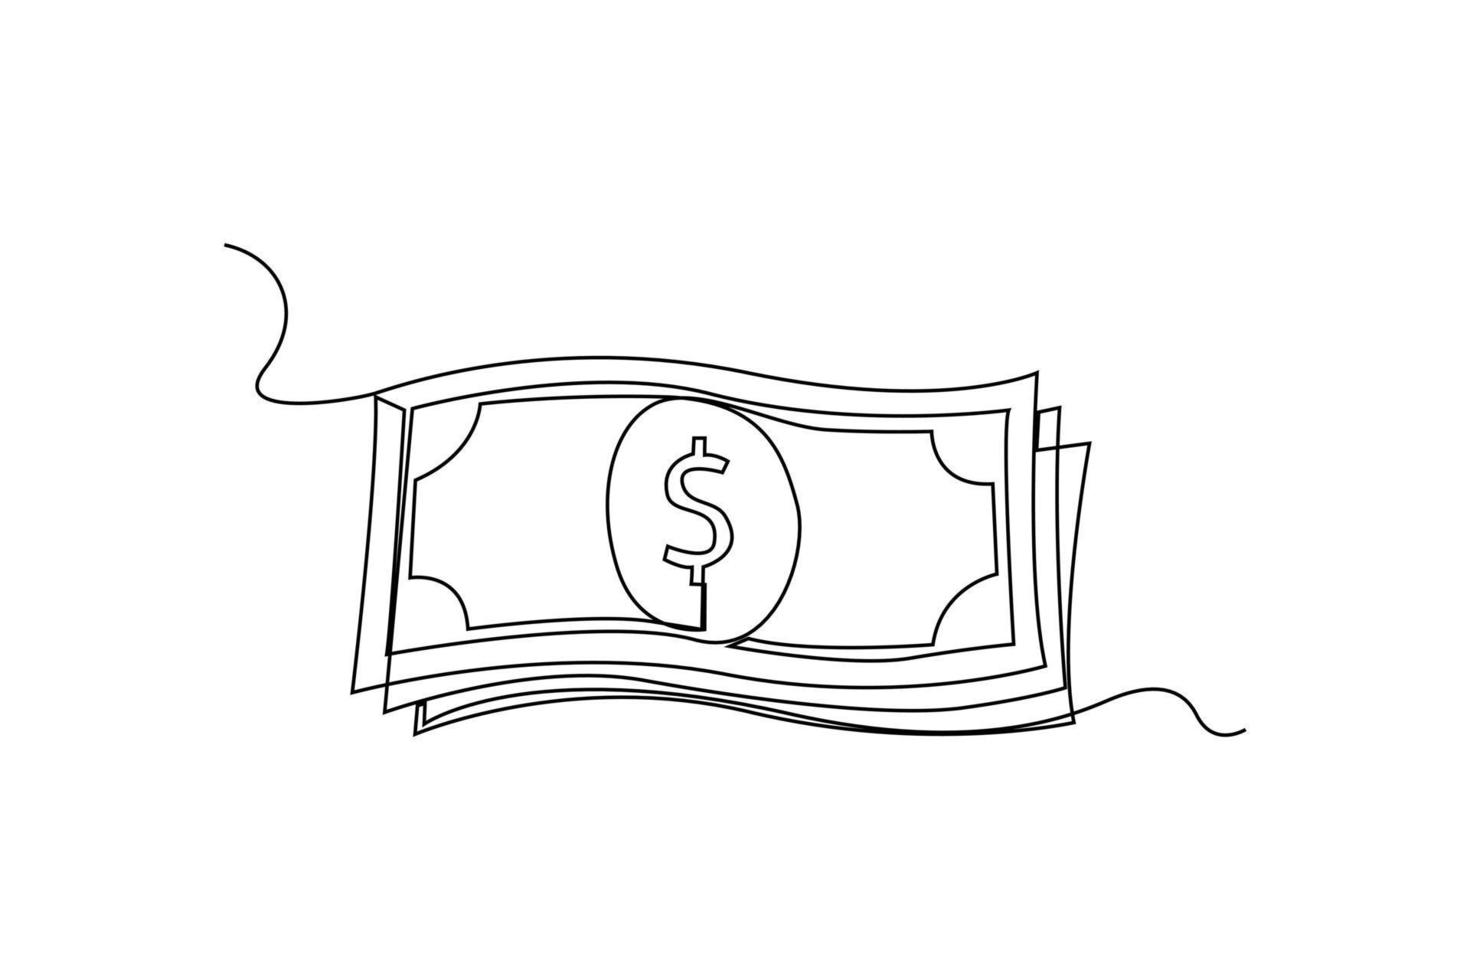 kontinuerlig en linje teckning tre dollar papper. Land valuta begrepp. enda linje teckning design grafisk vektor illustration